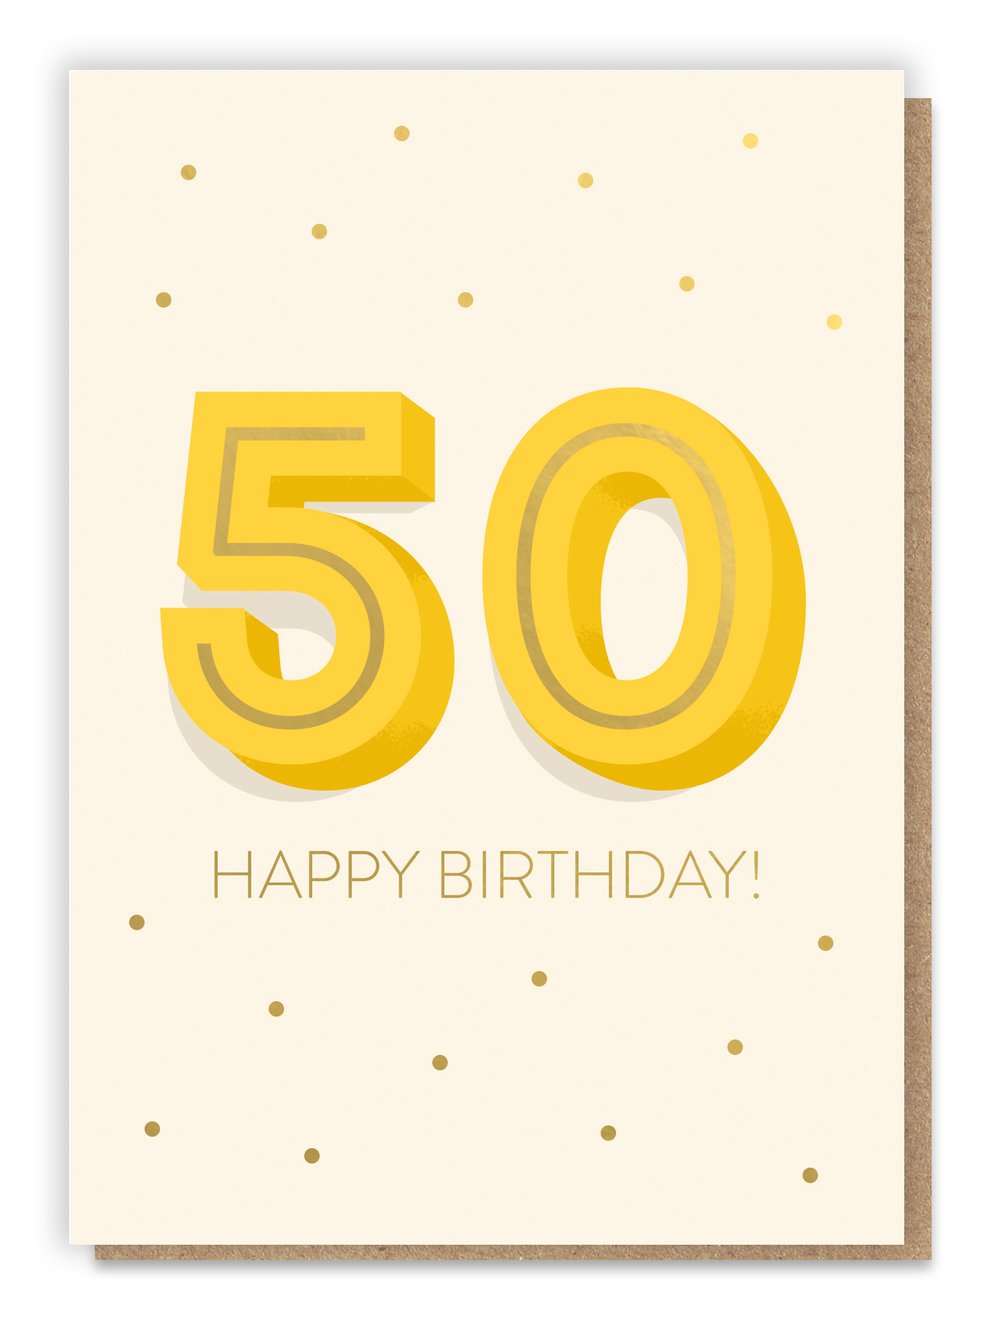 Big 5-0 Birthday Card - Age 50